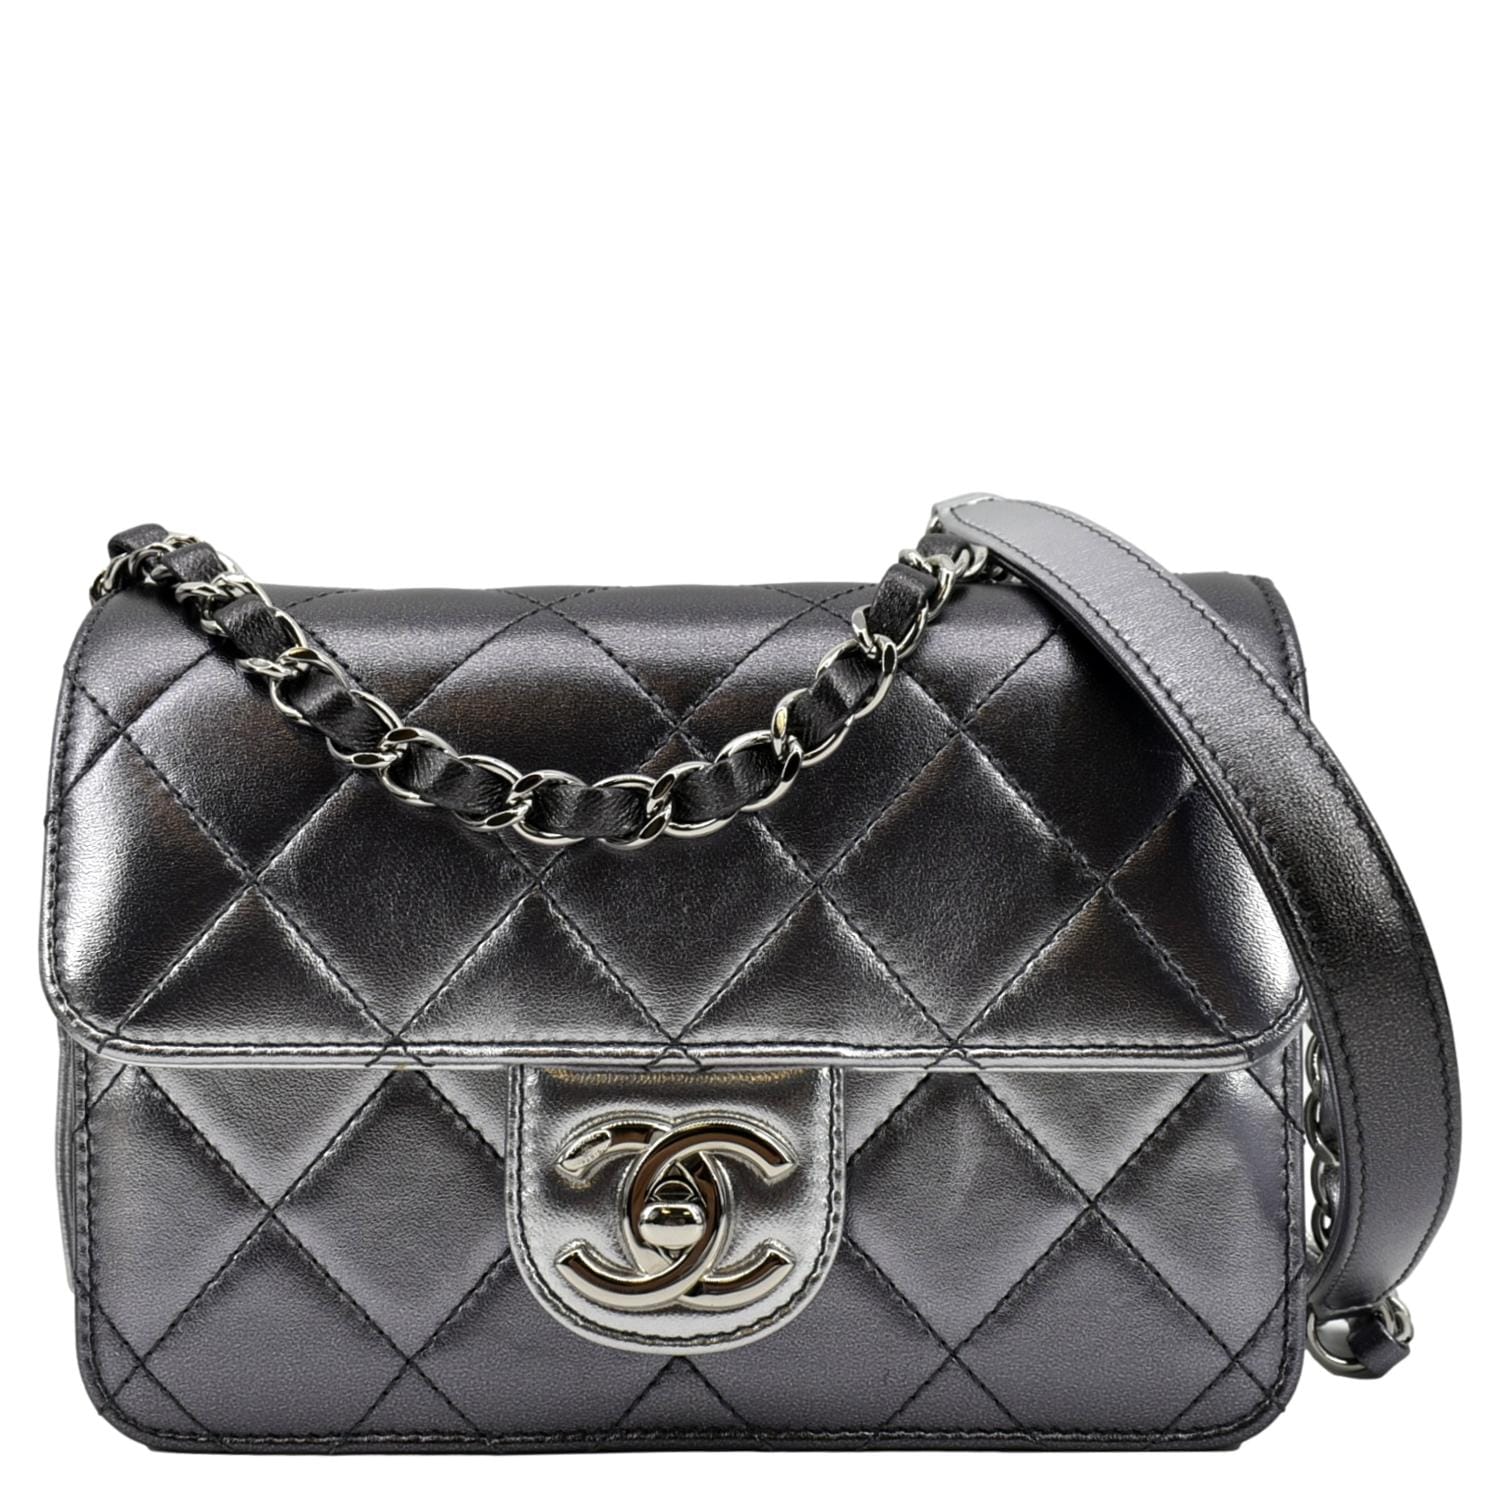 Chanel cross body bag. Want it!  Chanel cross body bag, Chanel handbags, Chanel  bag